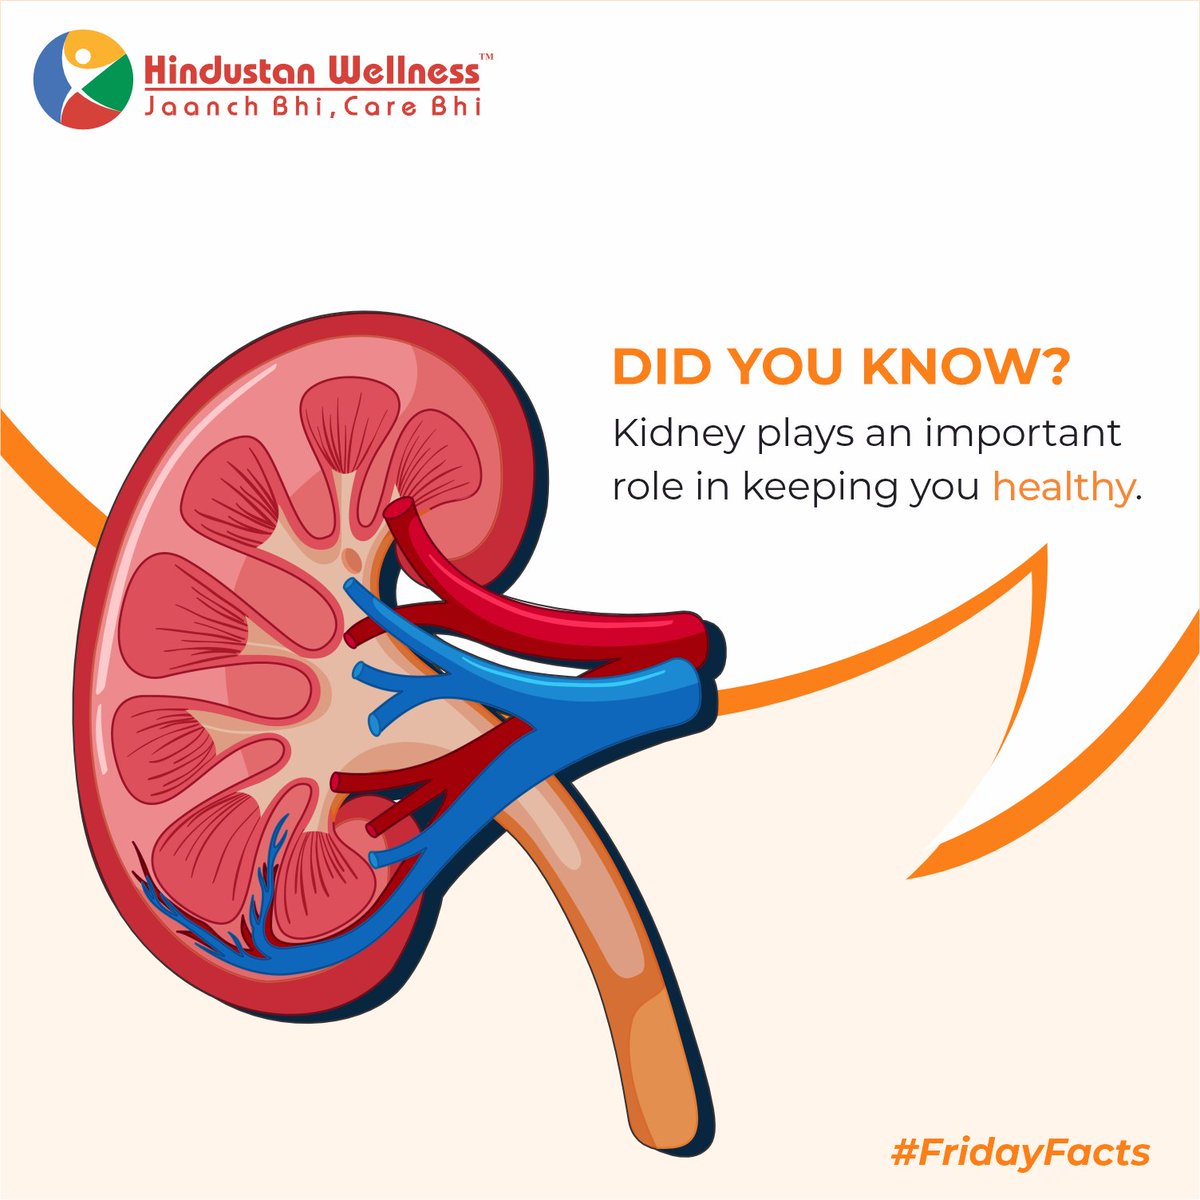 Did you know?

#didyouknow #kidneyhealth #kidneys #healthylifestyle #healthylife #healthcare #healthy #healthandwellness #healthiswealth #healthyliving #jaanchbhicarebhi #HindustanWellness